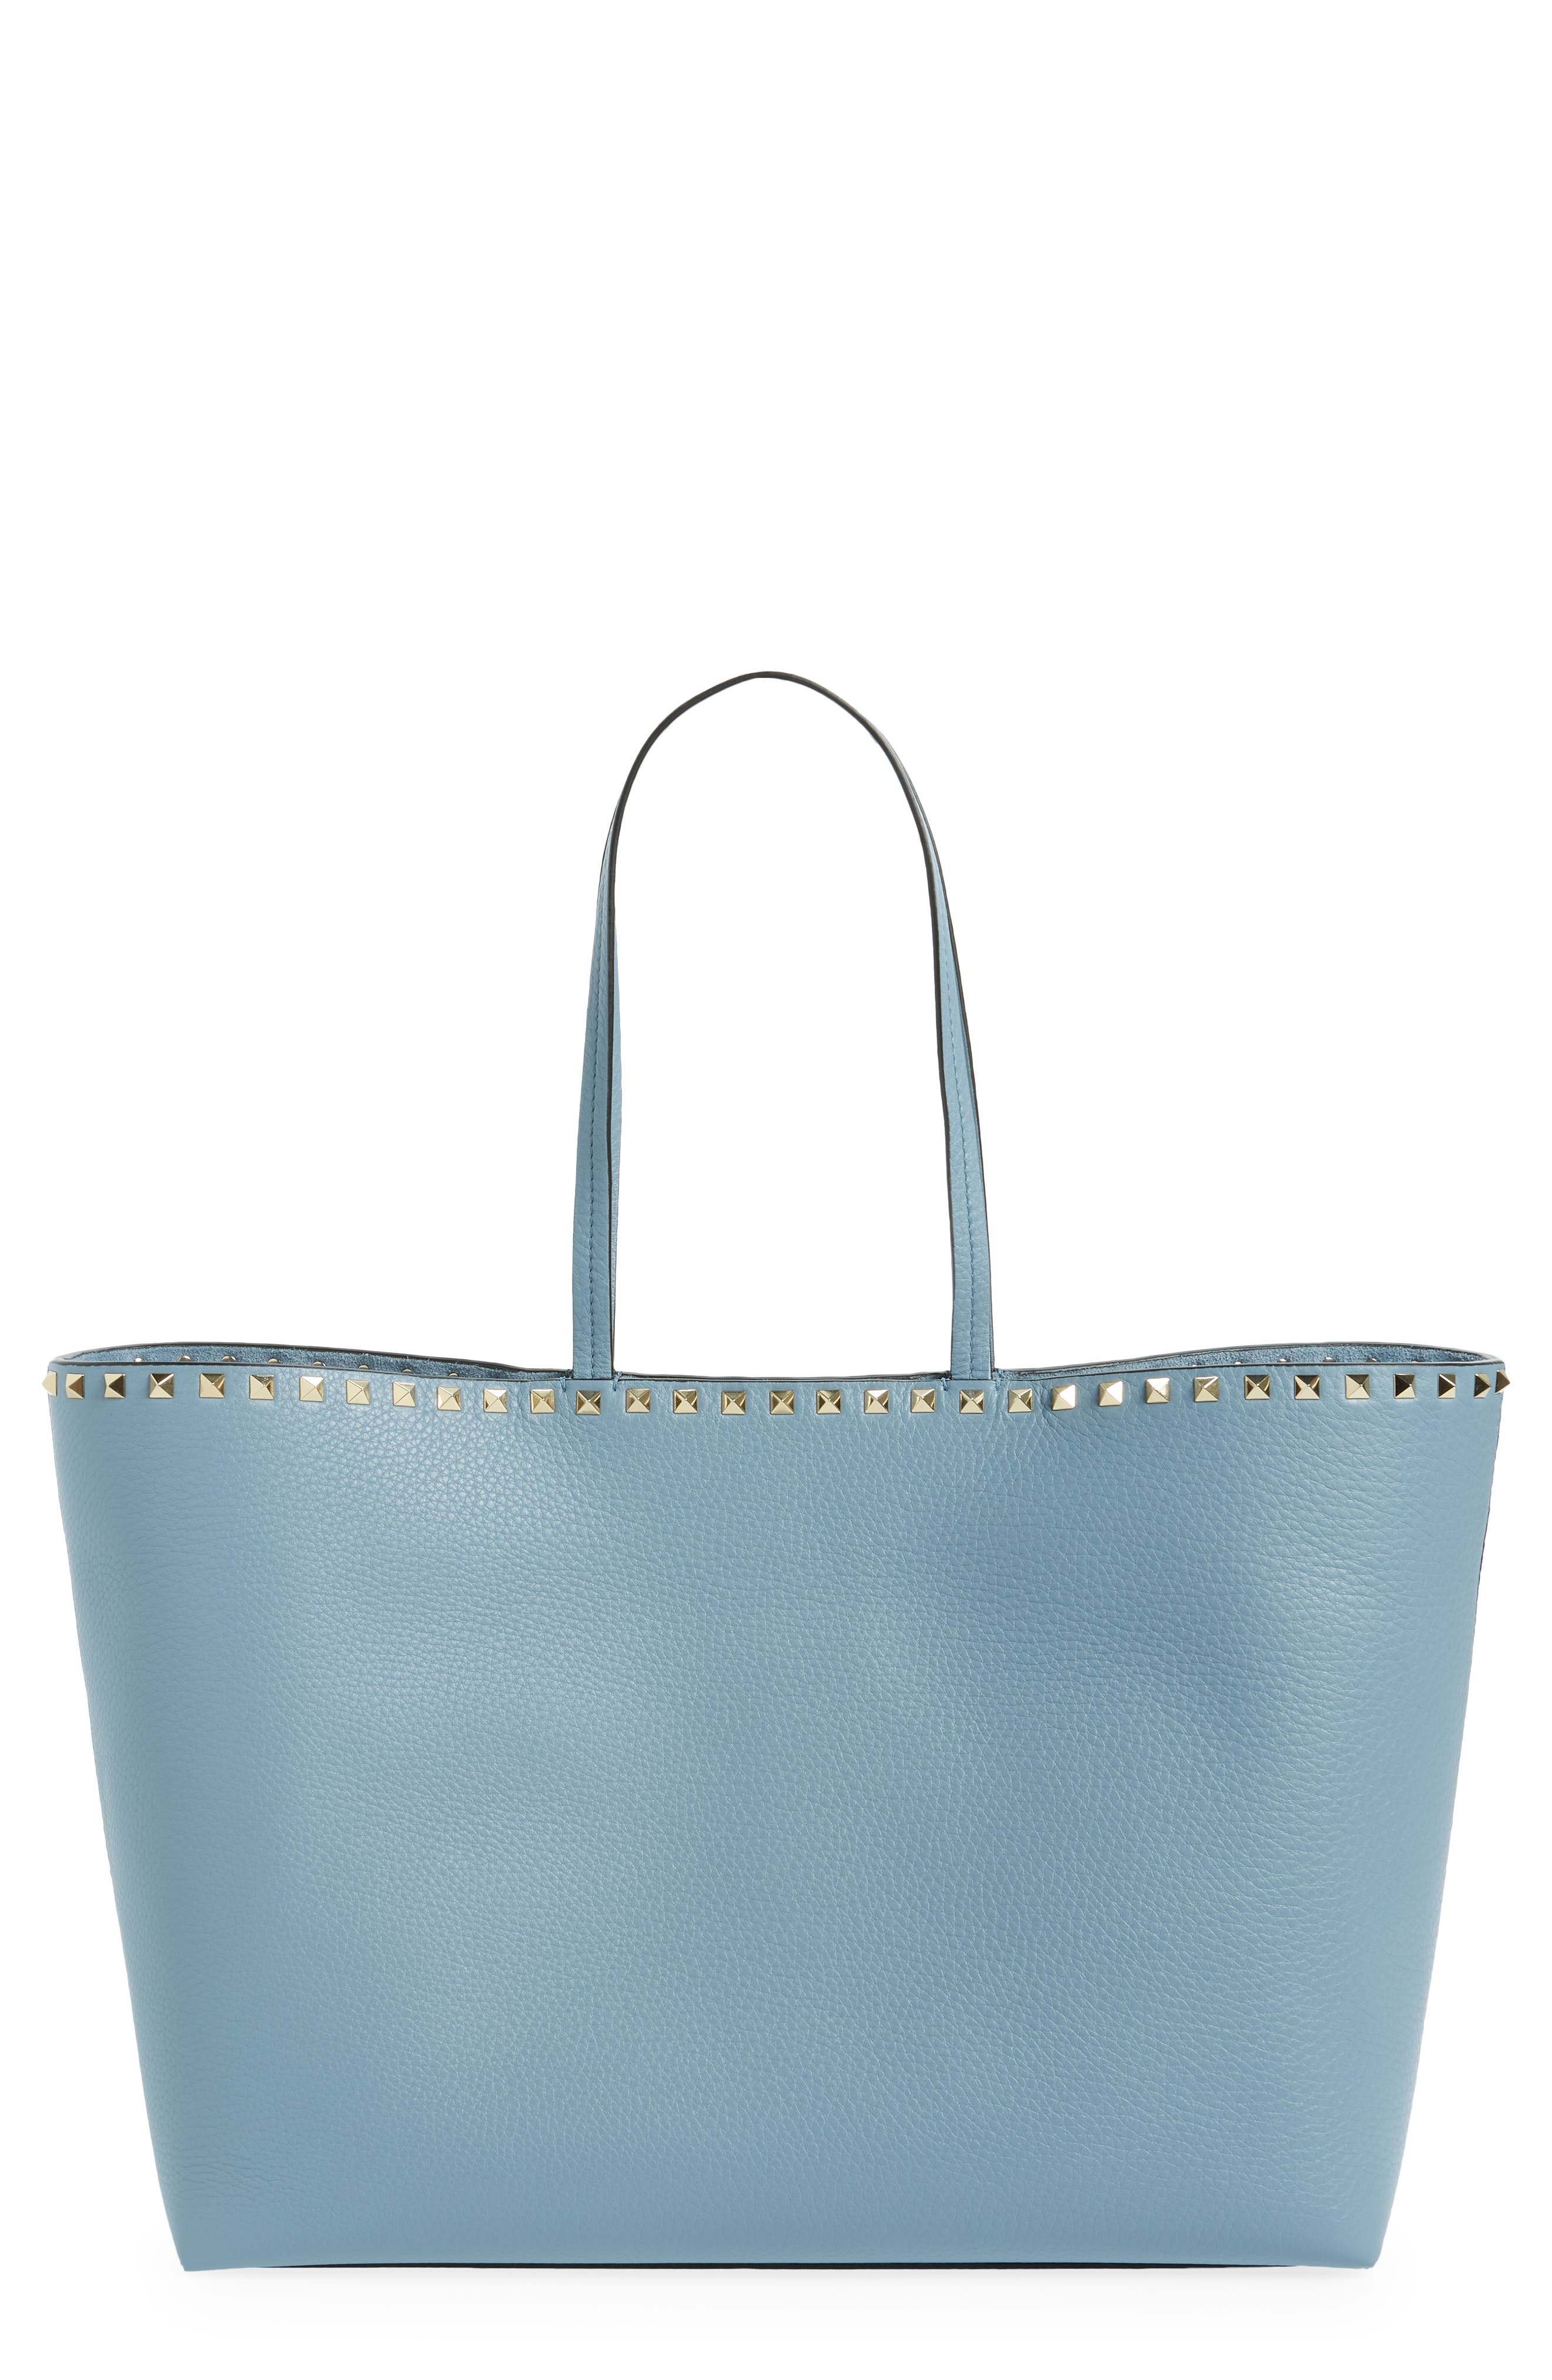 Blue BOYATU Real Leather Handbags Purses for Women Fashion Top Handle Bag Ladies Designer Totes 